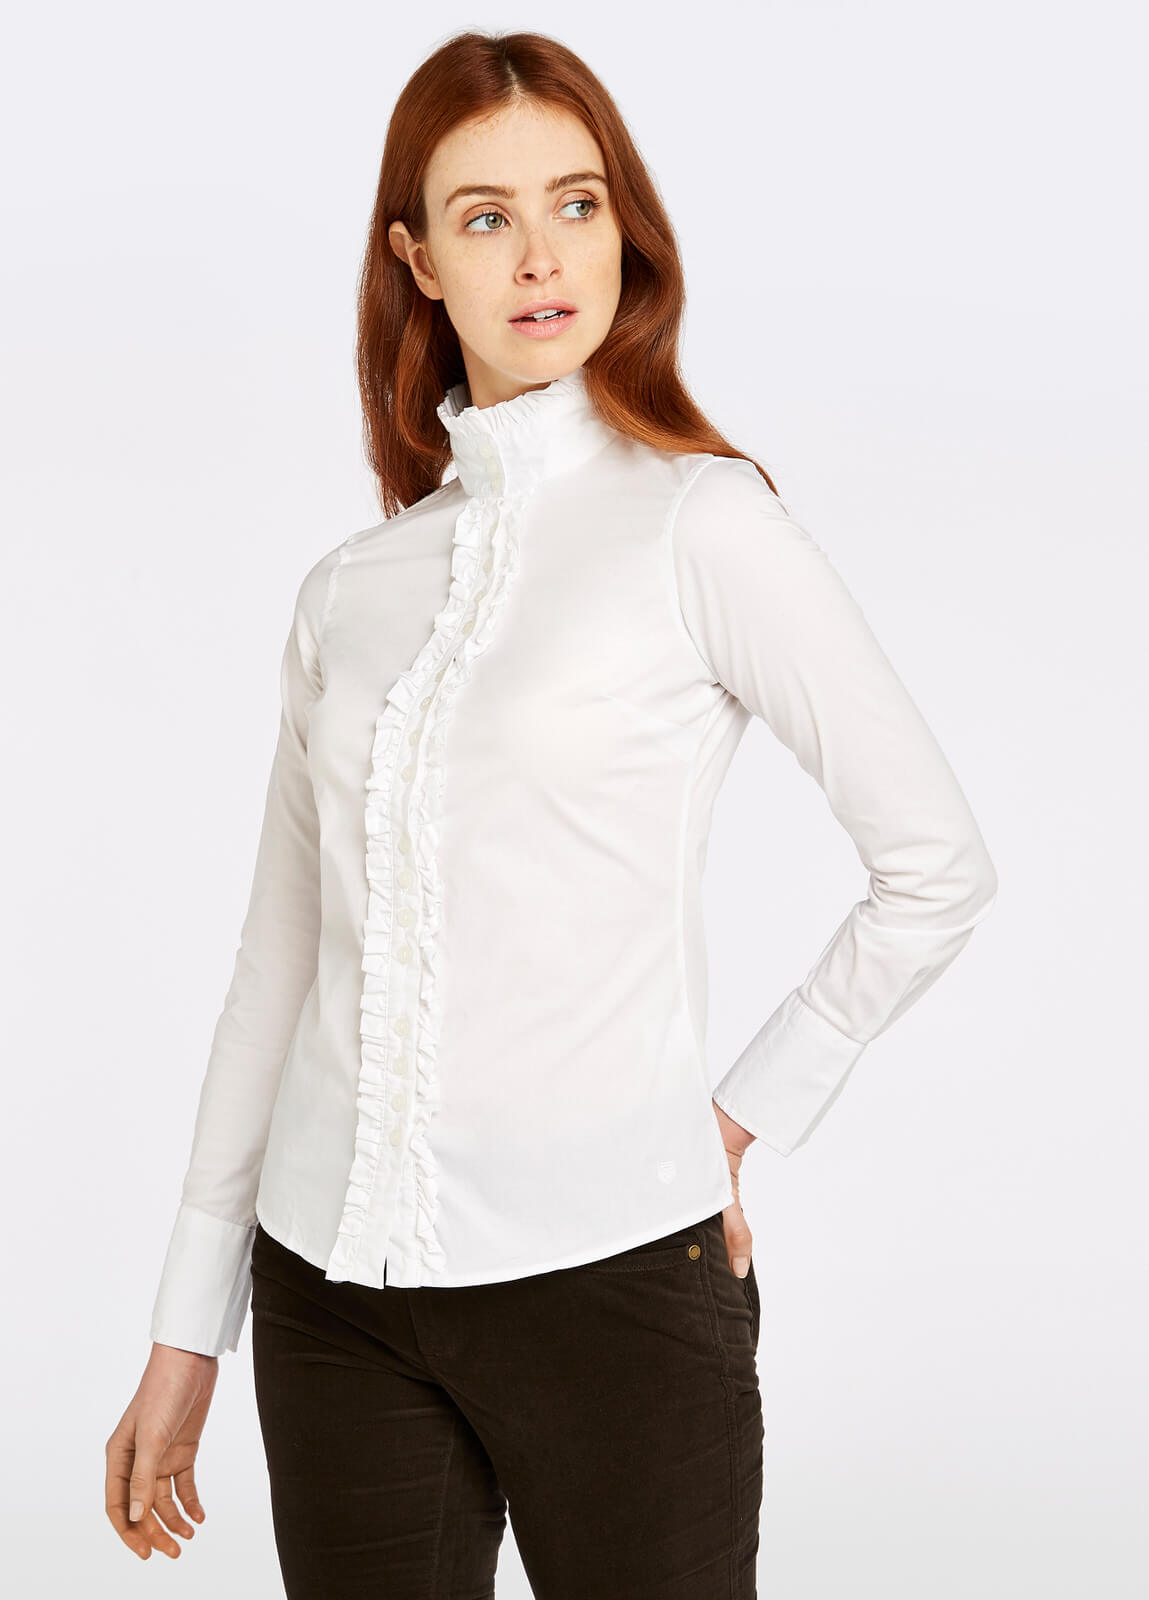 Beautifully designed USA Dubarry | Shirts for Ireland Dubarry - Women of